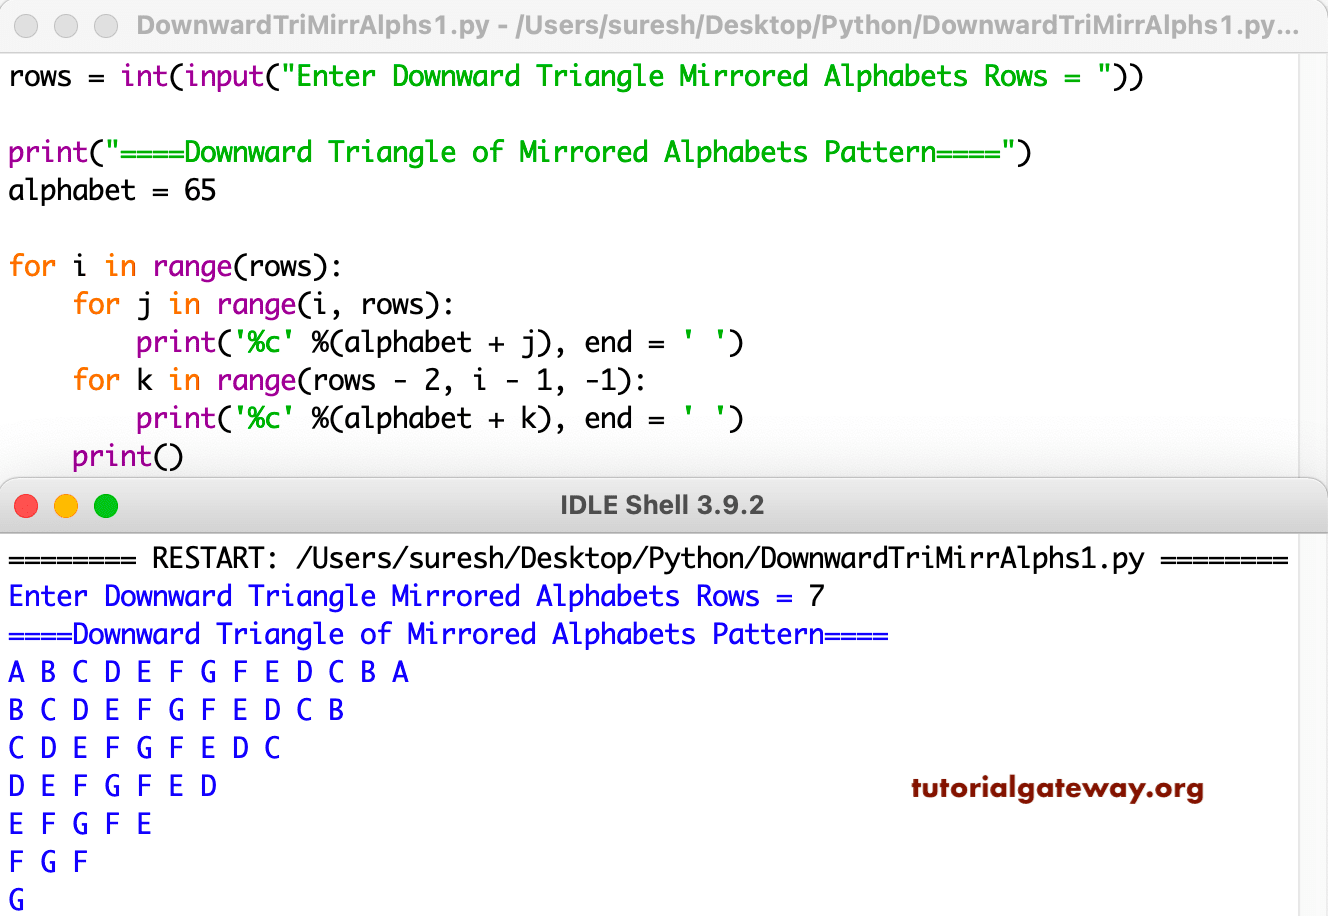 Python Program to Print Downward Triangle Mirrored Alphabets Pattern